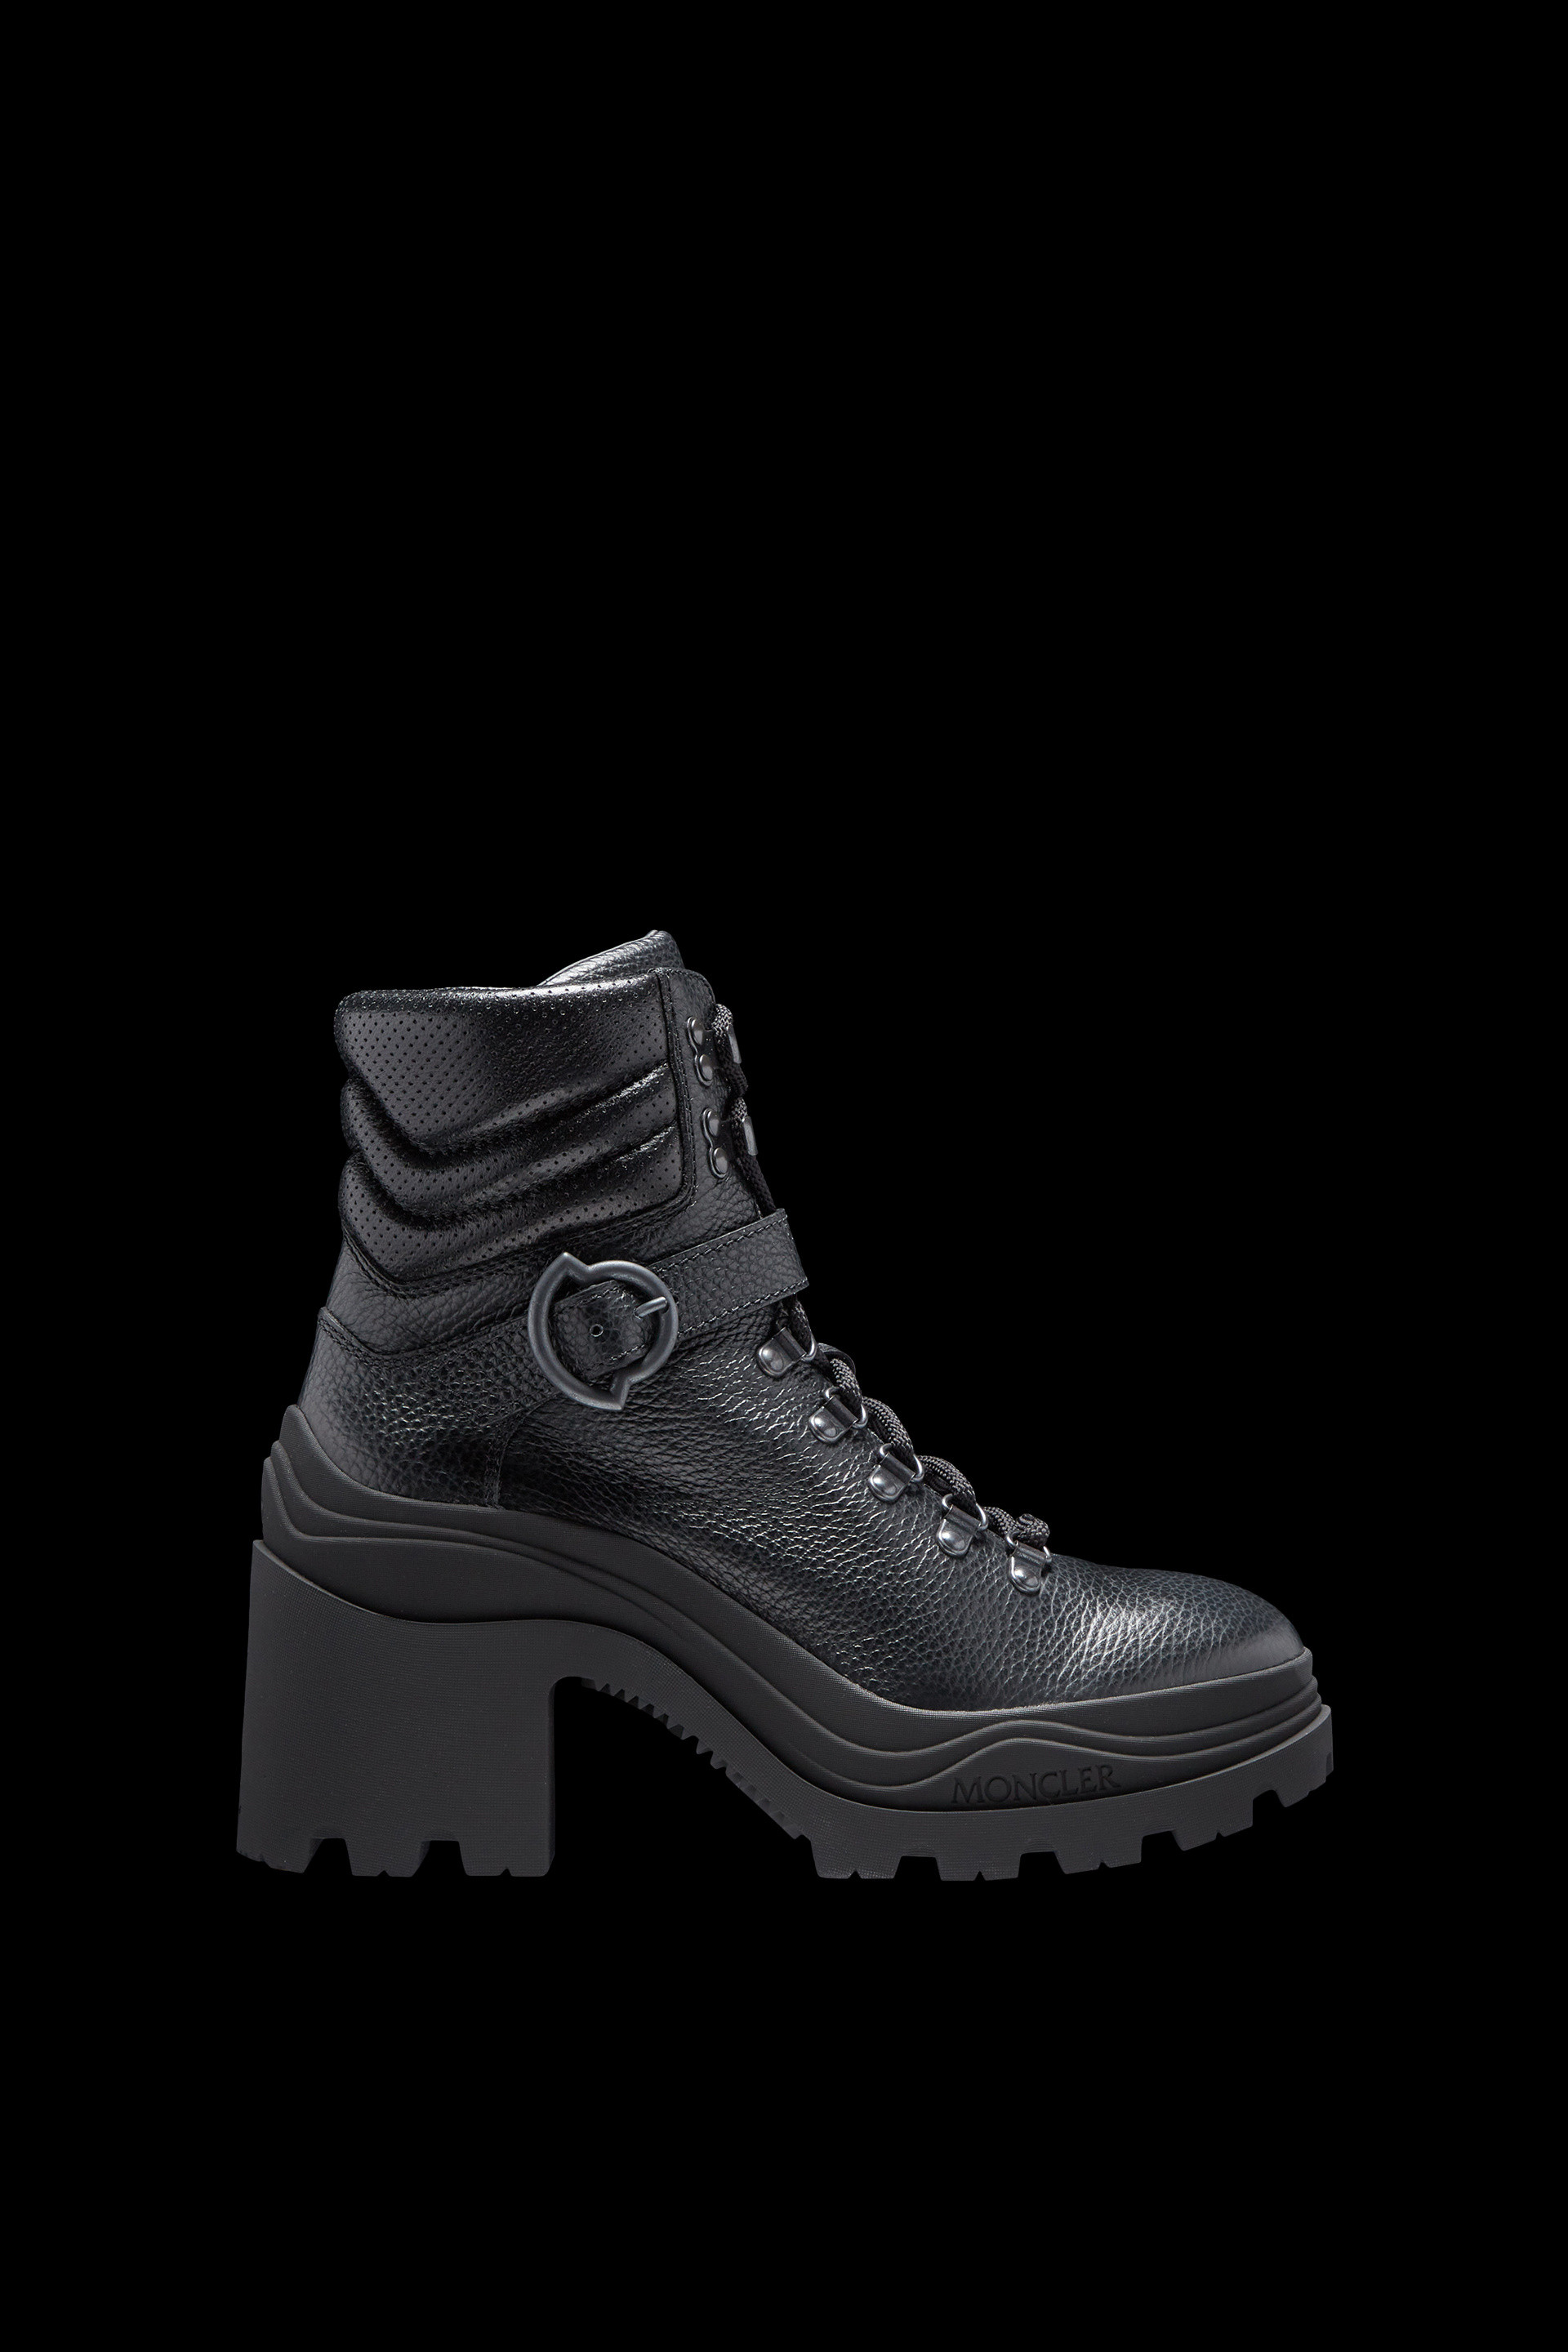 Black Envile Strap Ankle Boots - Boots for Women | Moncler US